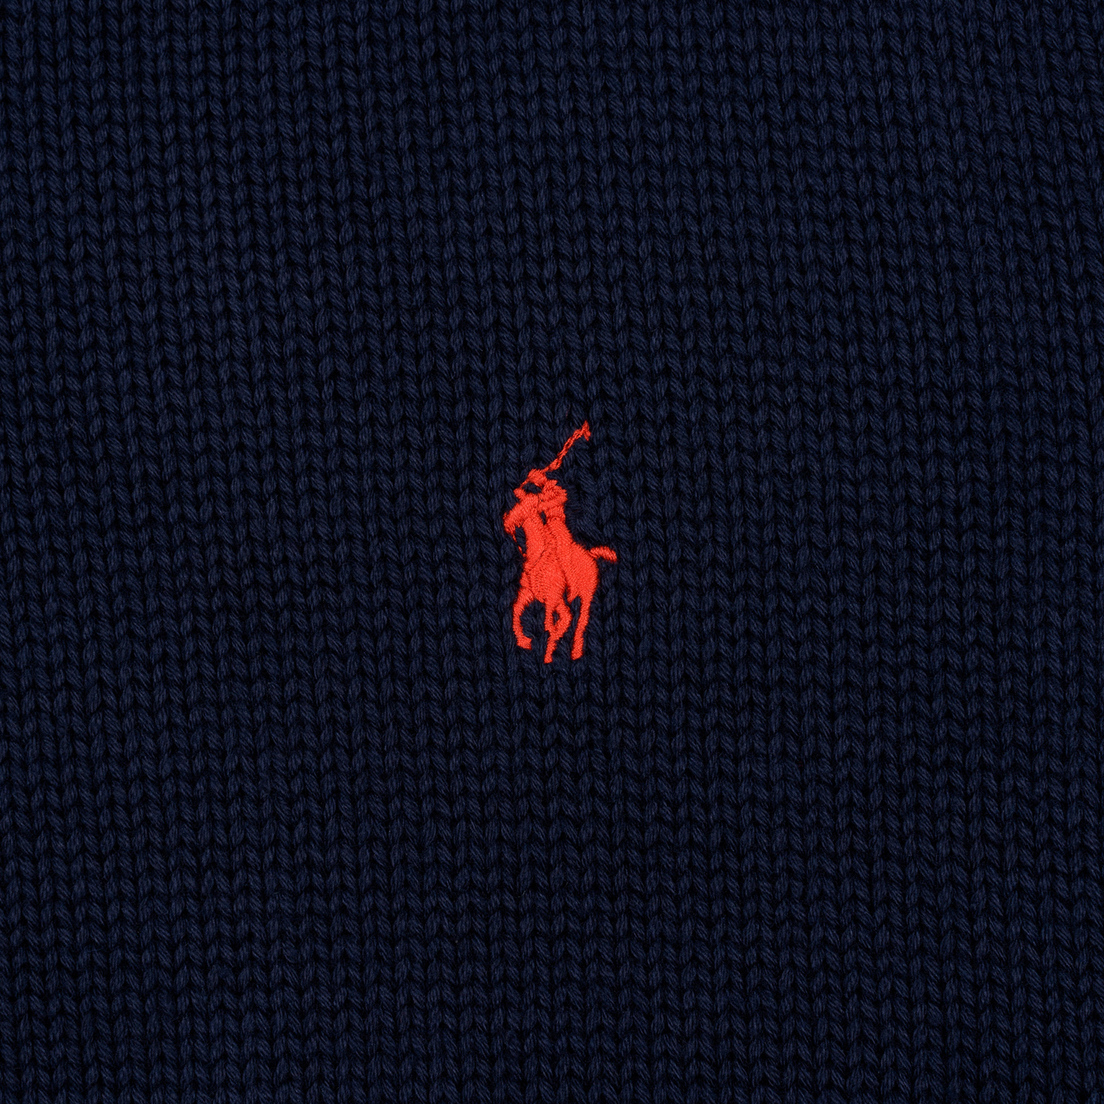 Polo Ralph Lauren Мужской свитер Classic Logo Cotton Crew Neck